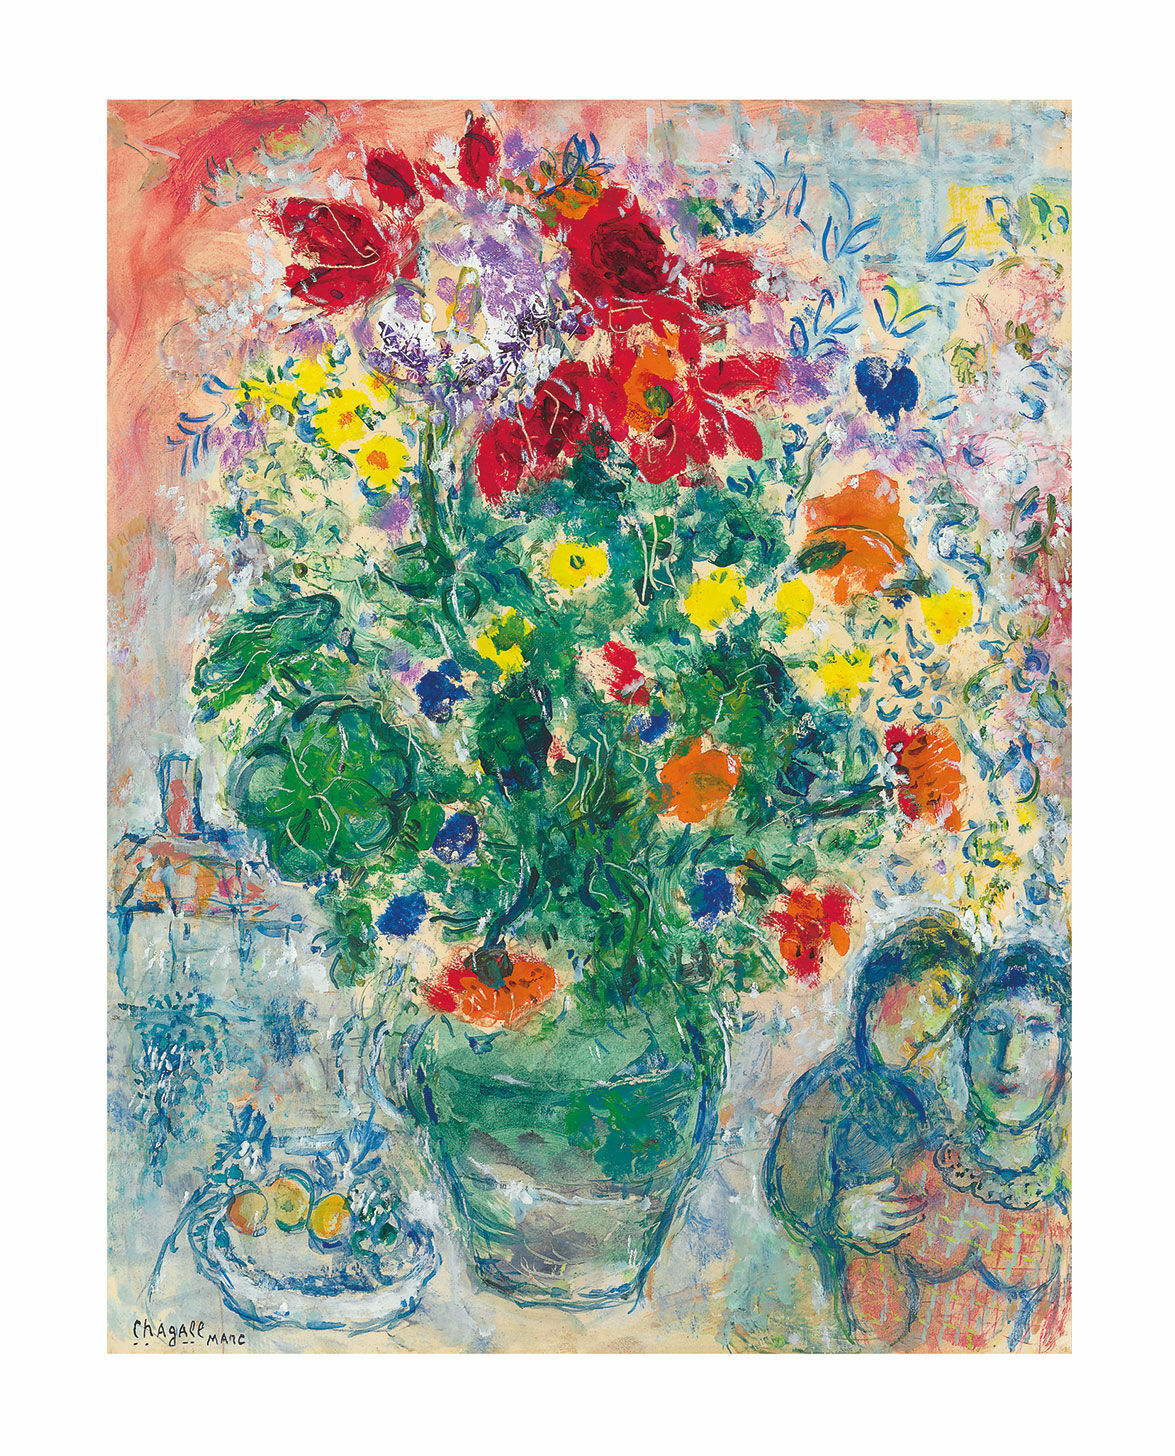 Picture "Bouquet de Renoncules" (1968), unframed by Marc Chagall